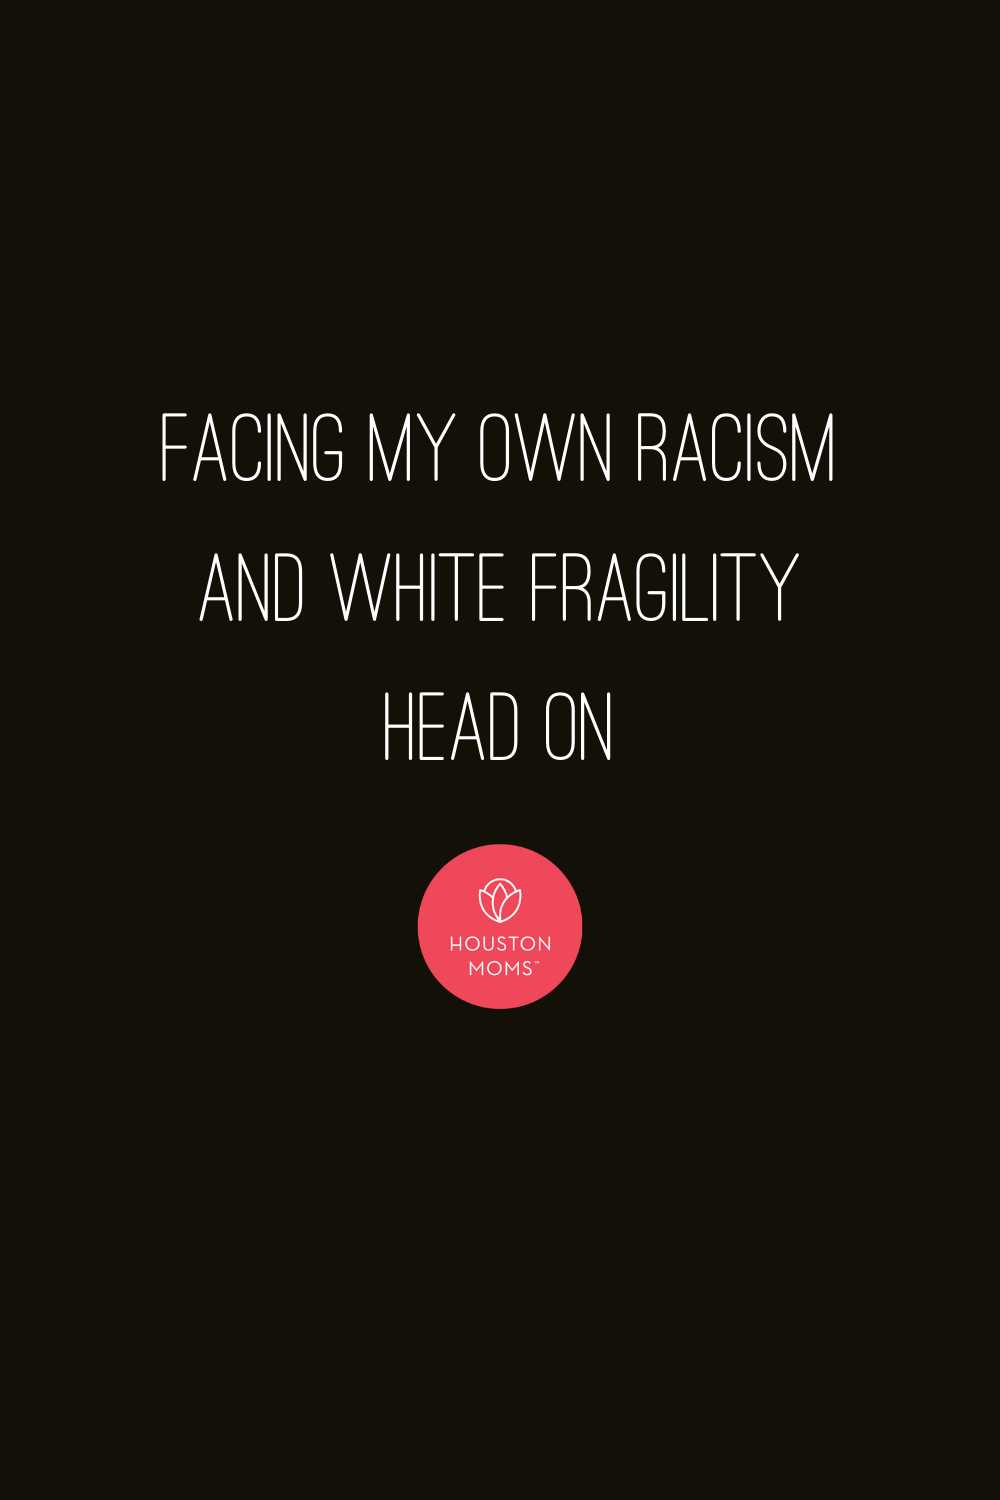 Houston Moms "Facing My Own Racism and White Fragility Head On" #houstonmoms #houstonmomsblog #momsaroundhouston